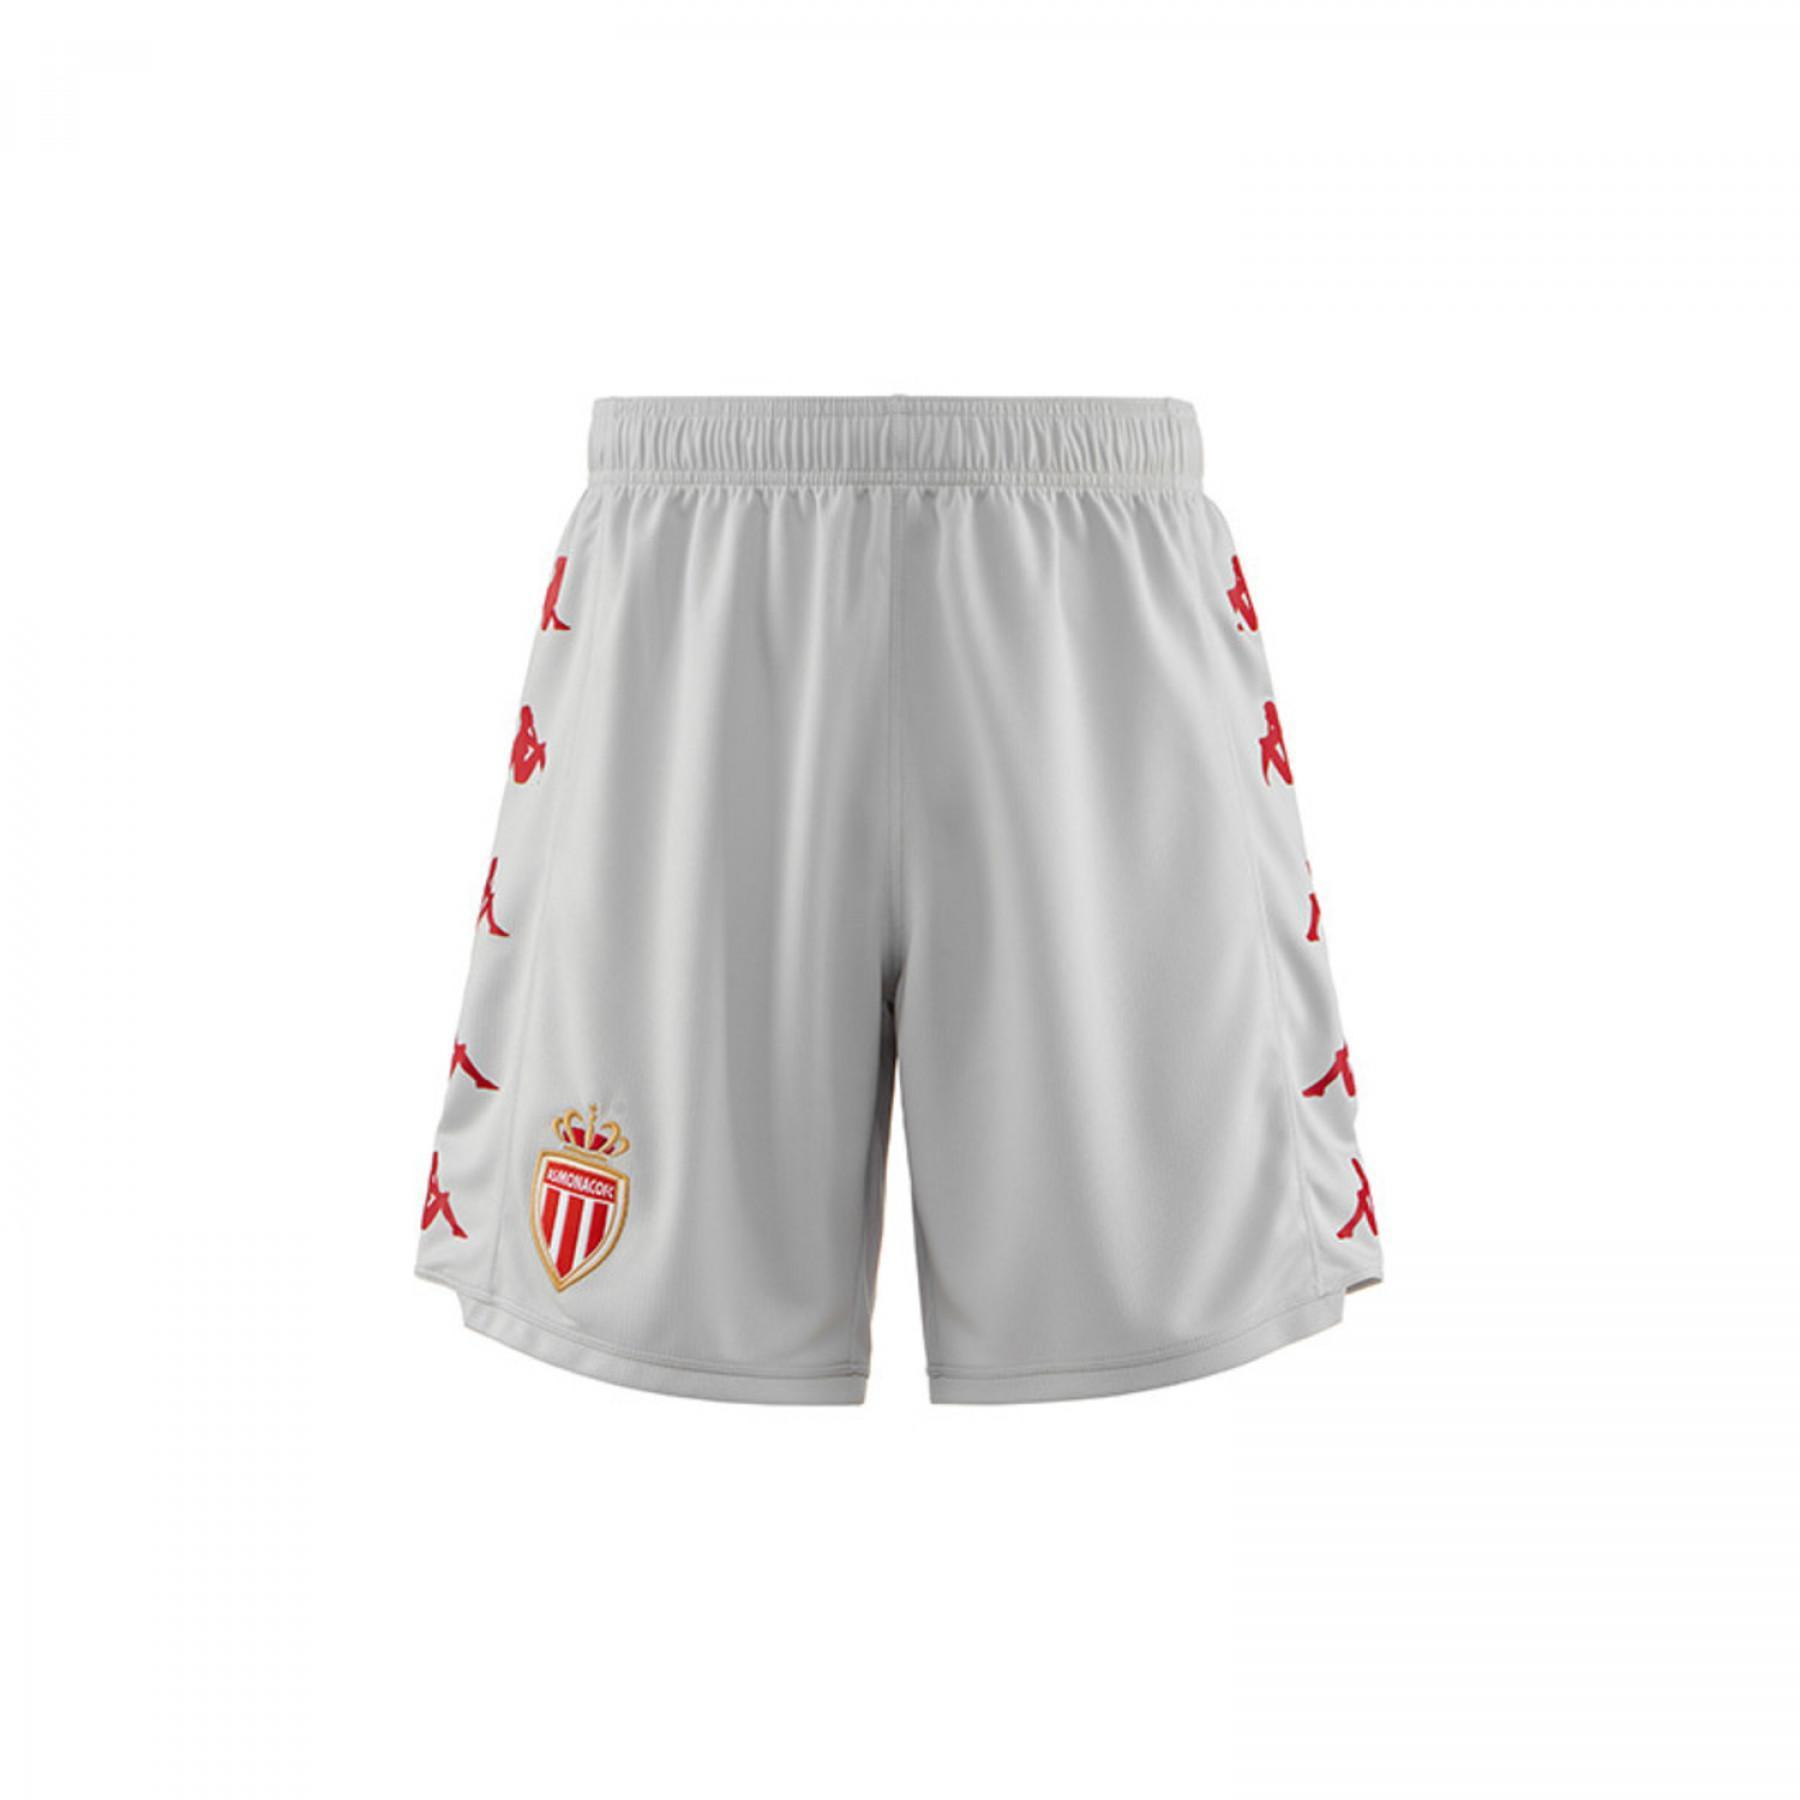 Children's outdoor goalie shorts AS Monaco 2019/20